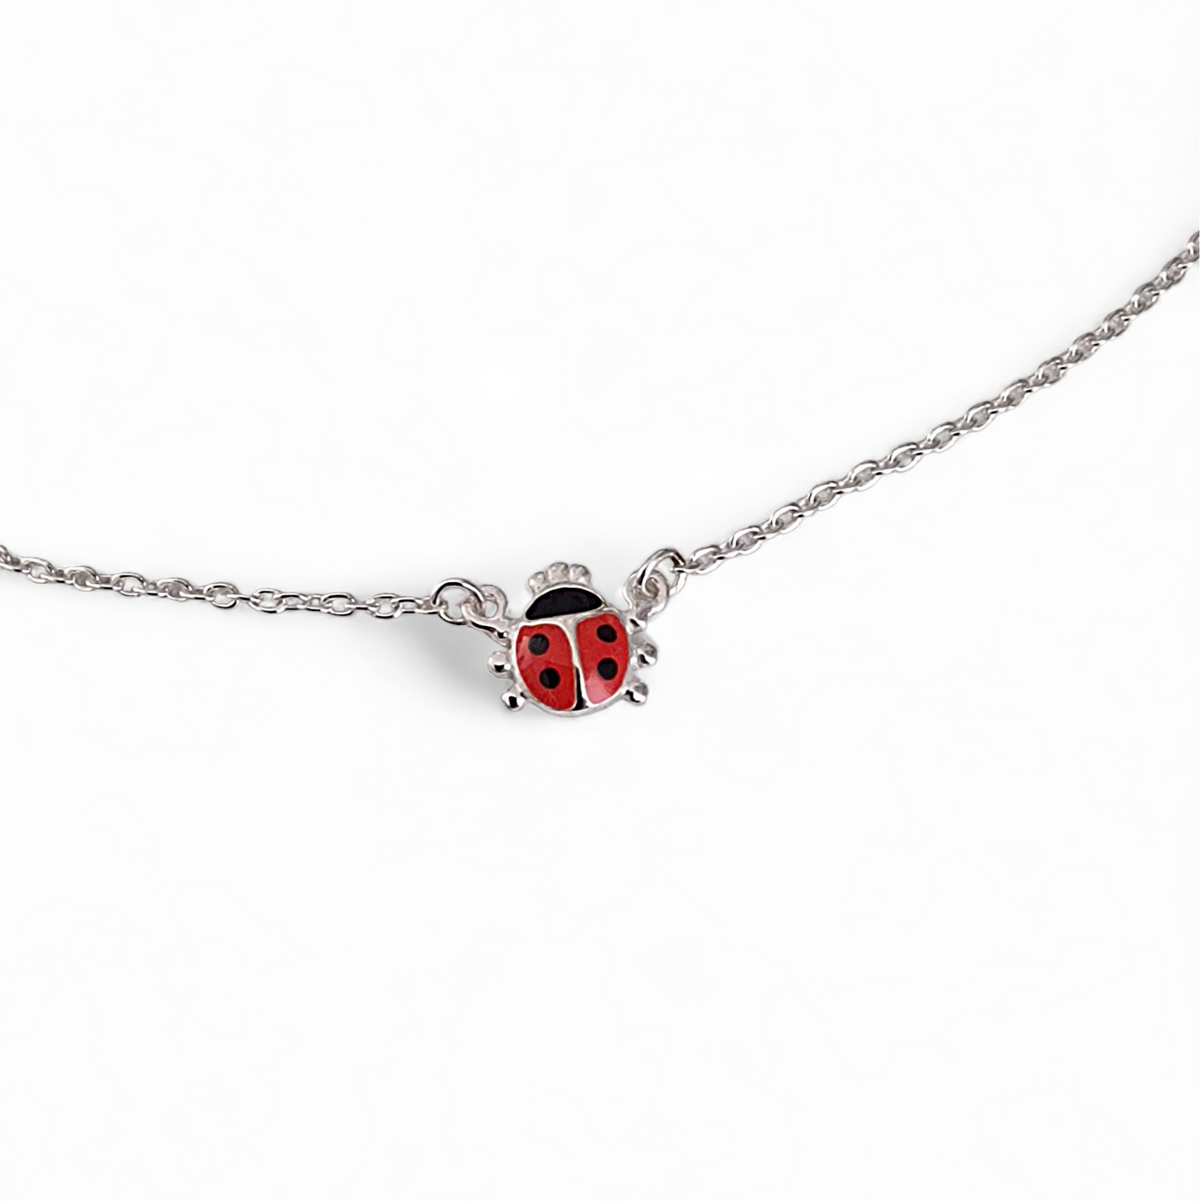 Ladybug jewelry set